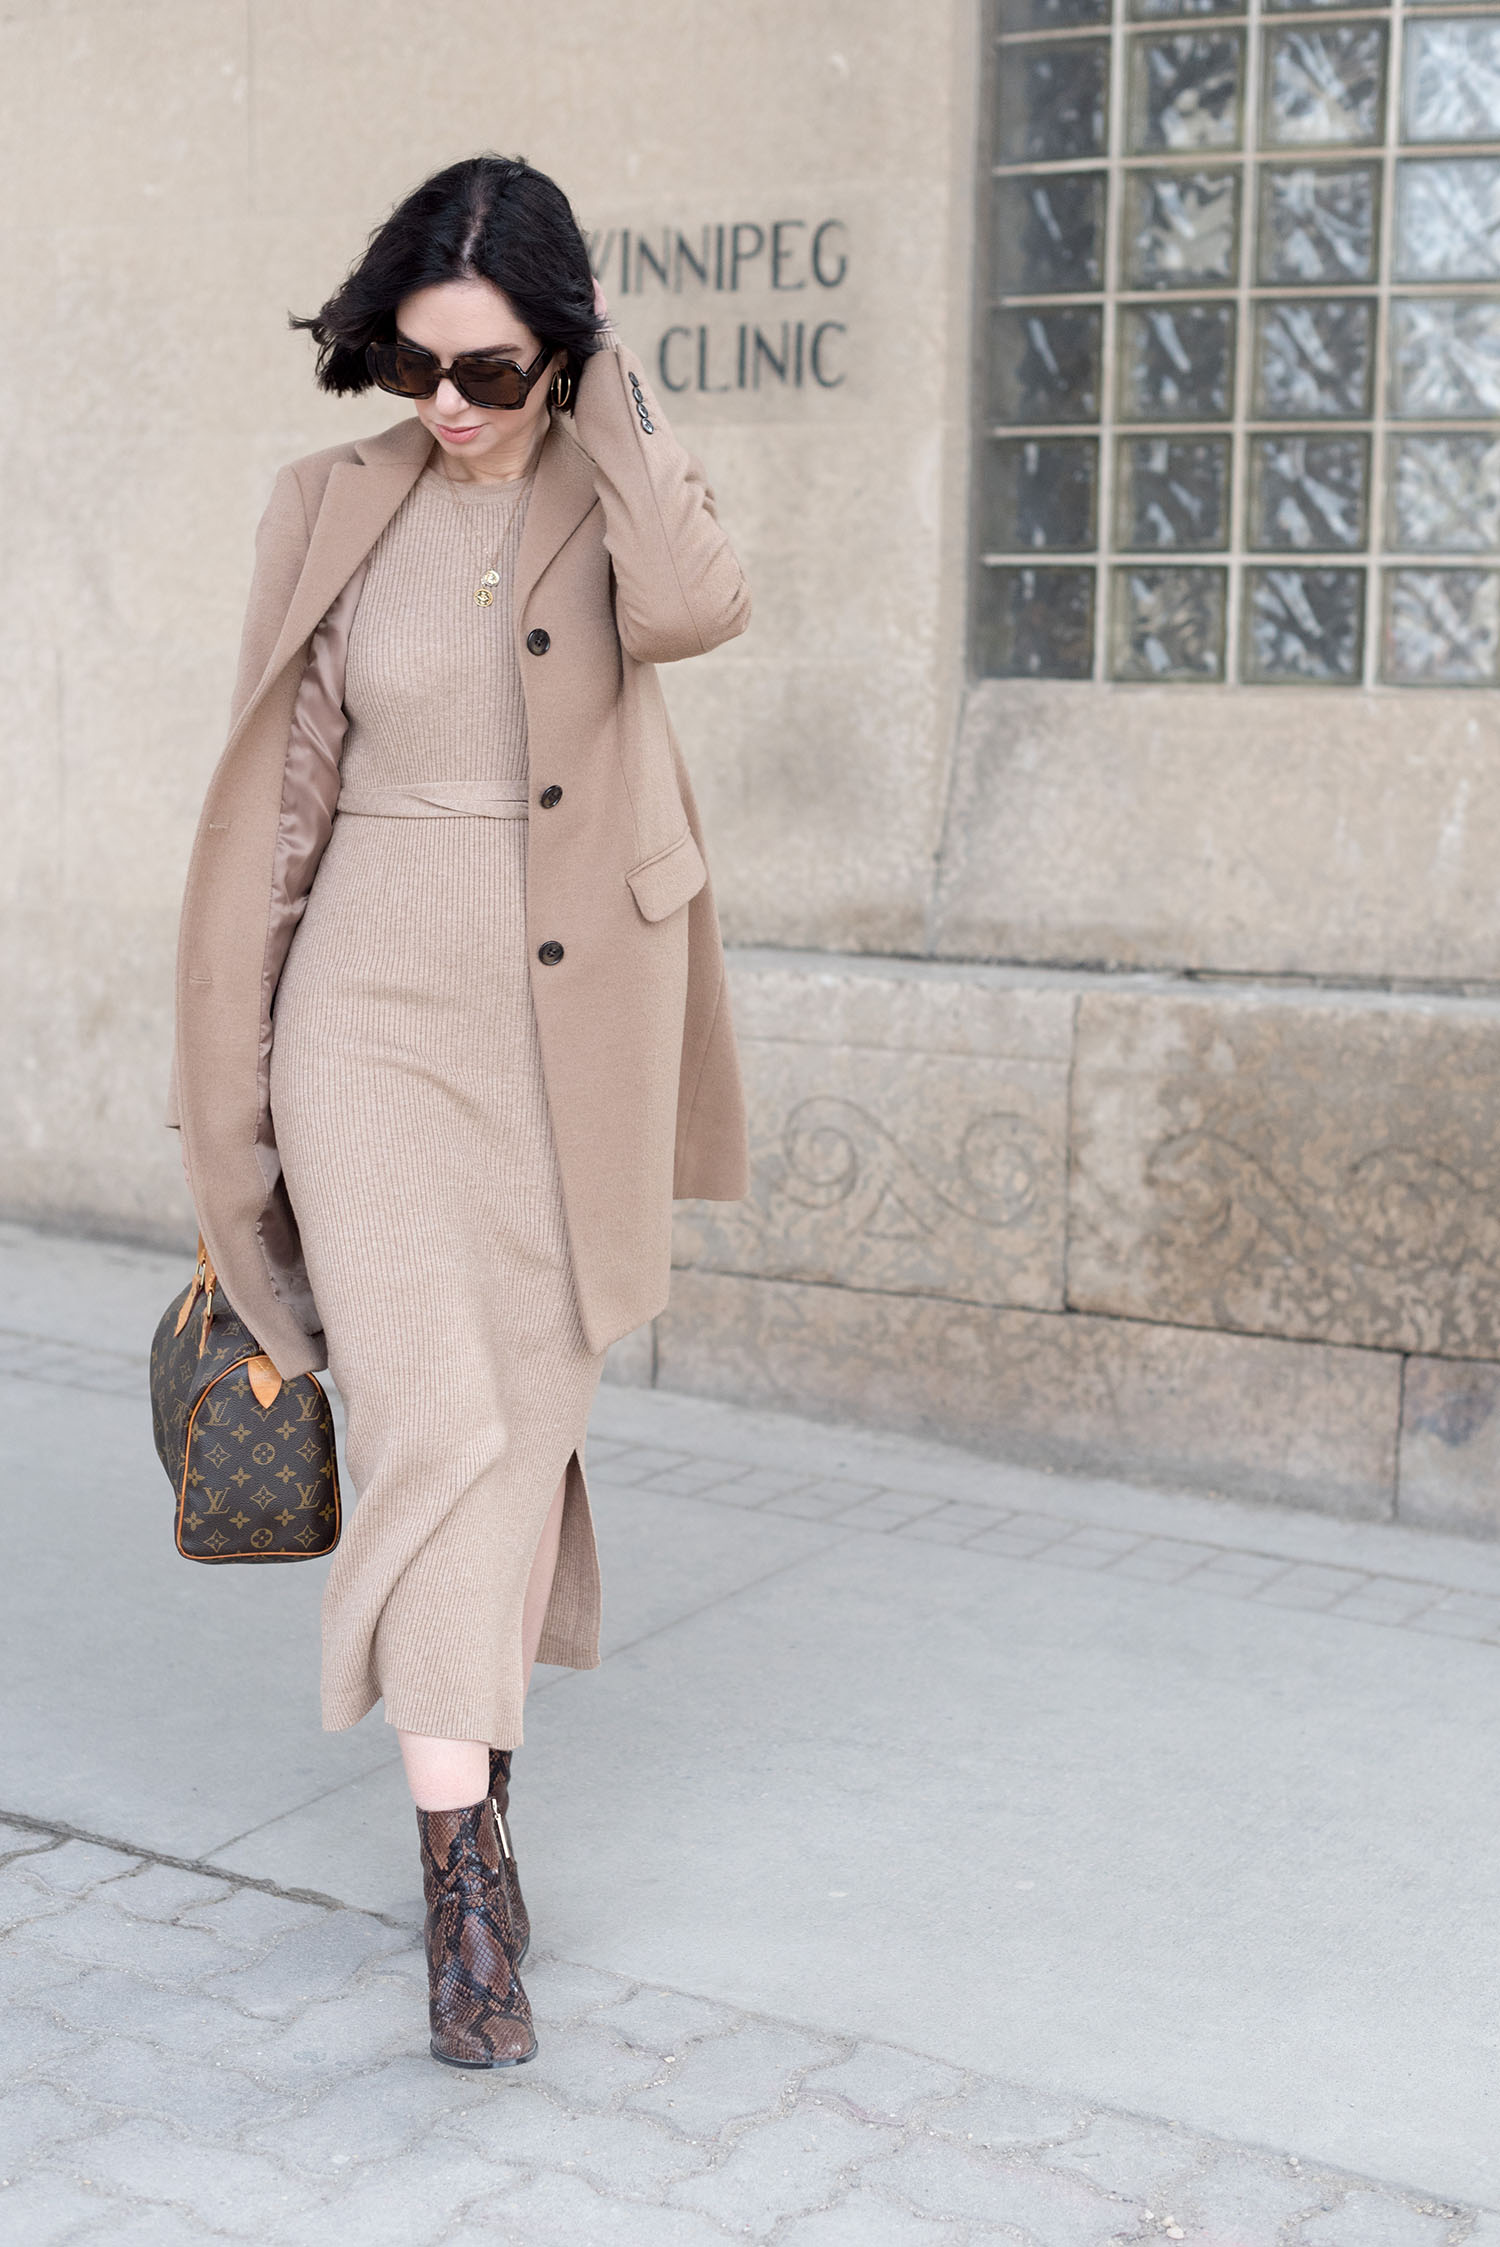 Top Winnipeg fashion blogger Cee Fardoe of Coco & Vera wears a Mango ribbed dress and Uniqlo camel coat